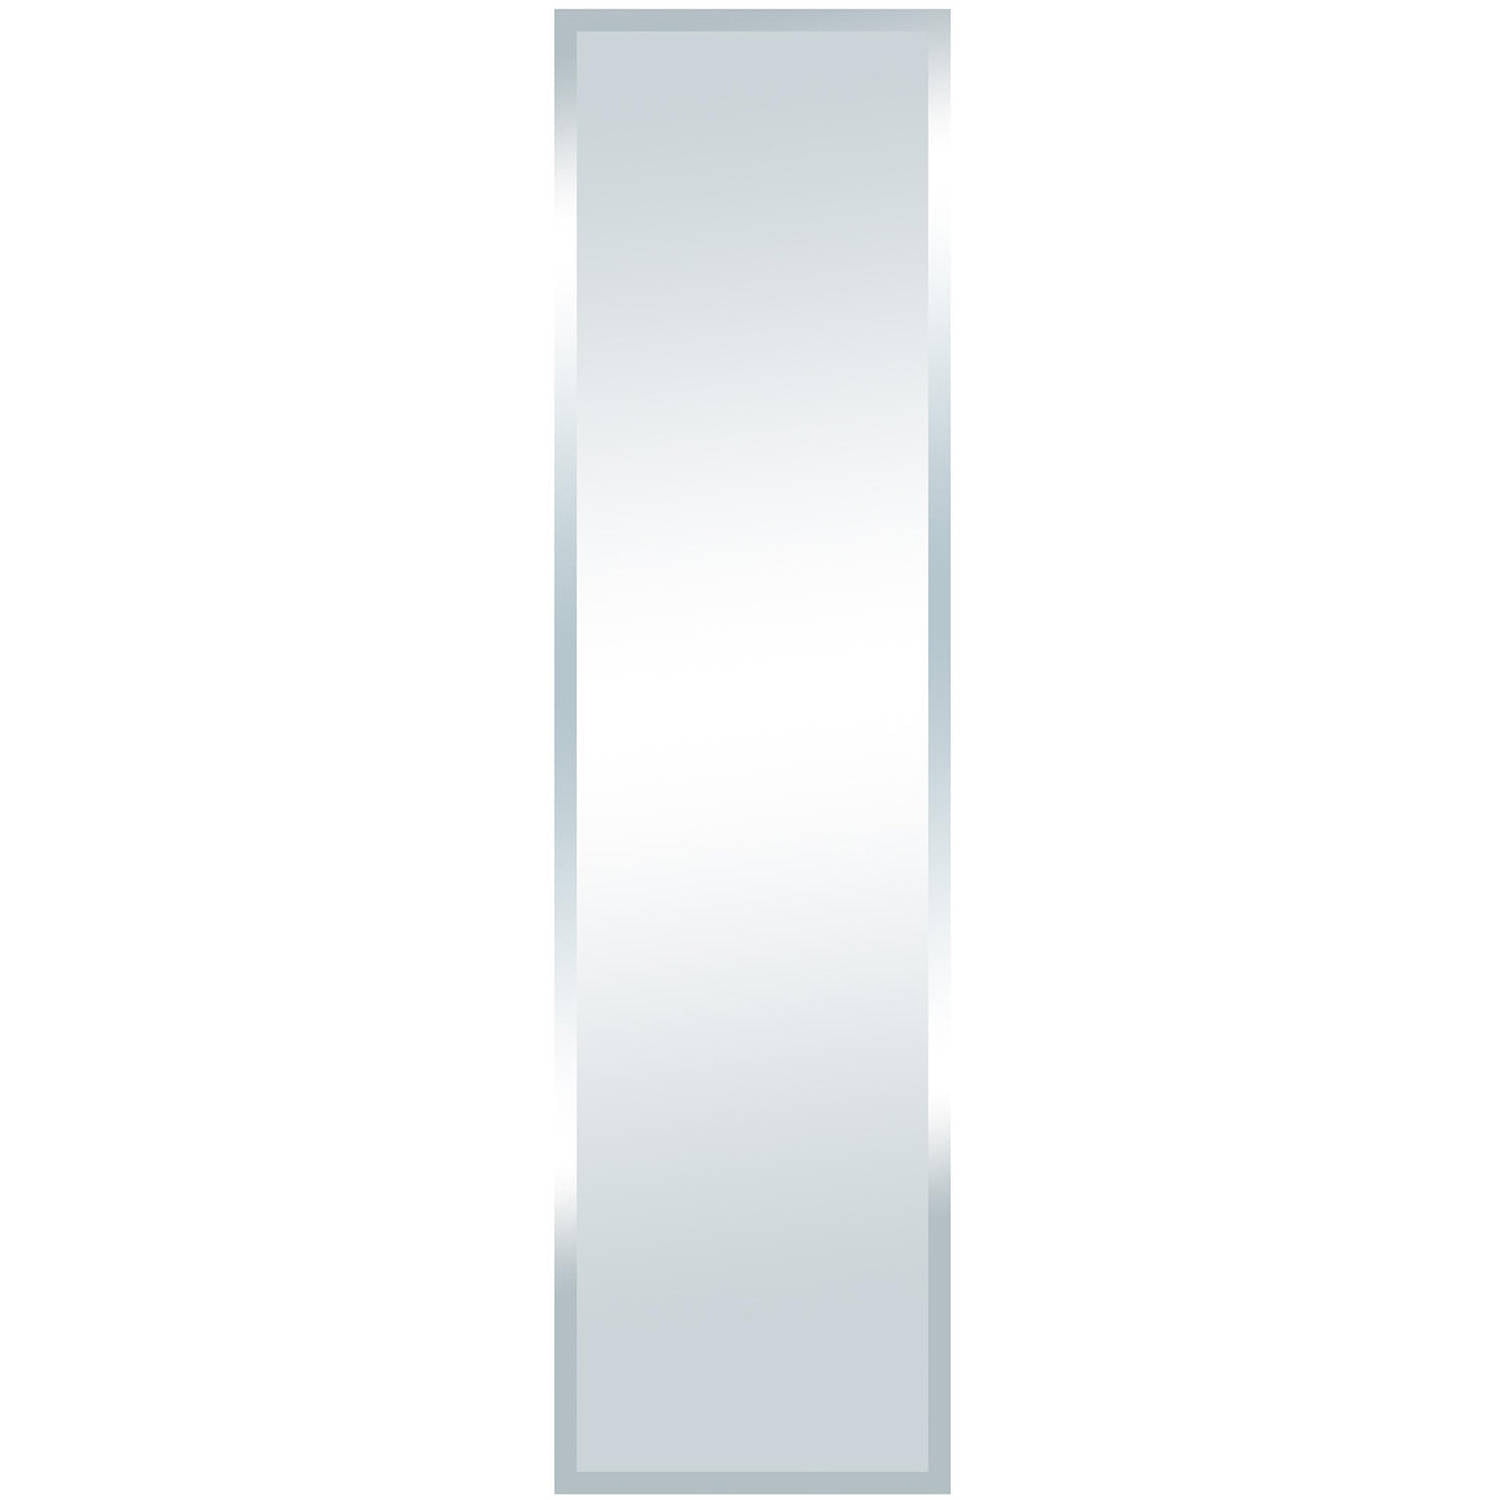 Mainstays Full Length Beveled-Edge Mirror 48' x 12'